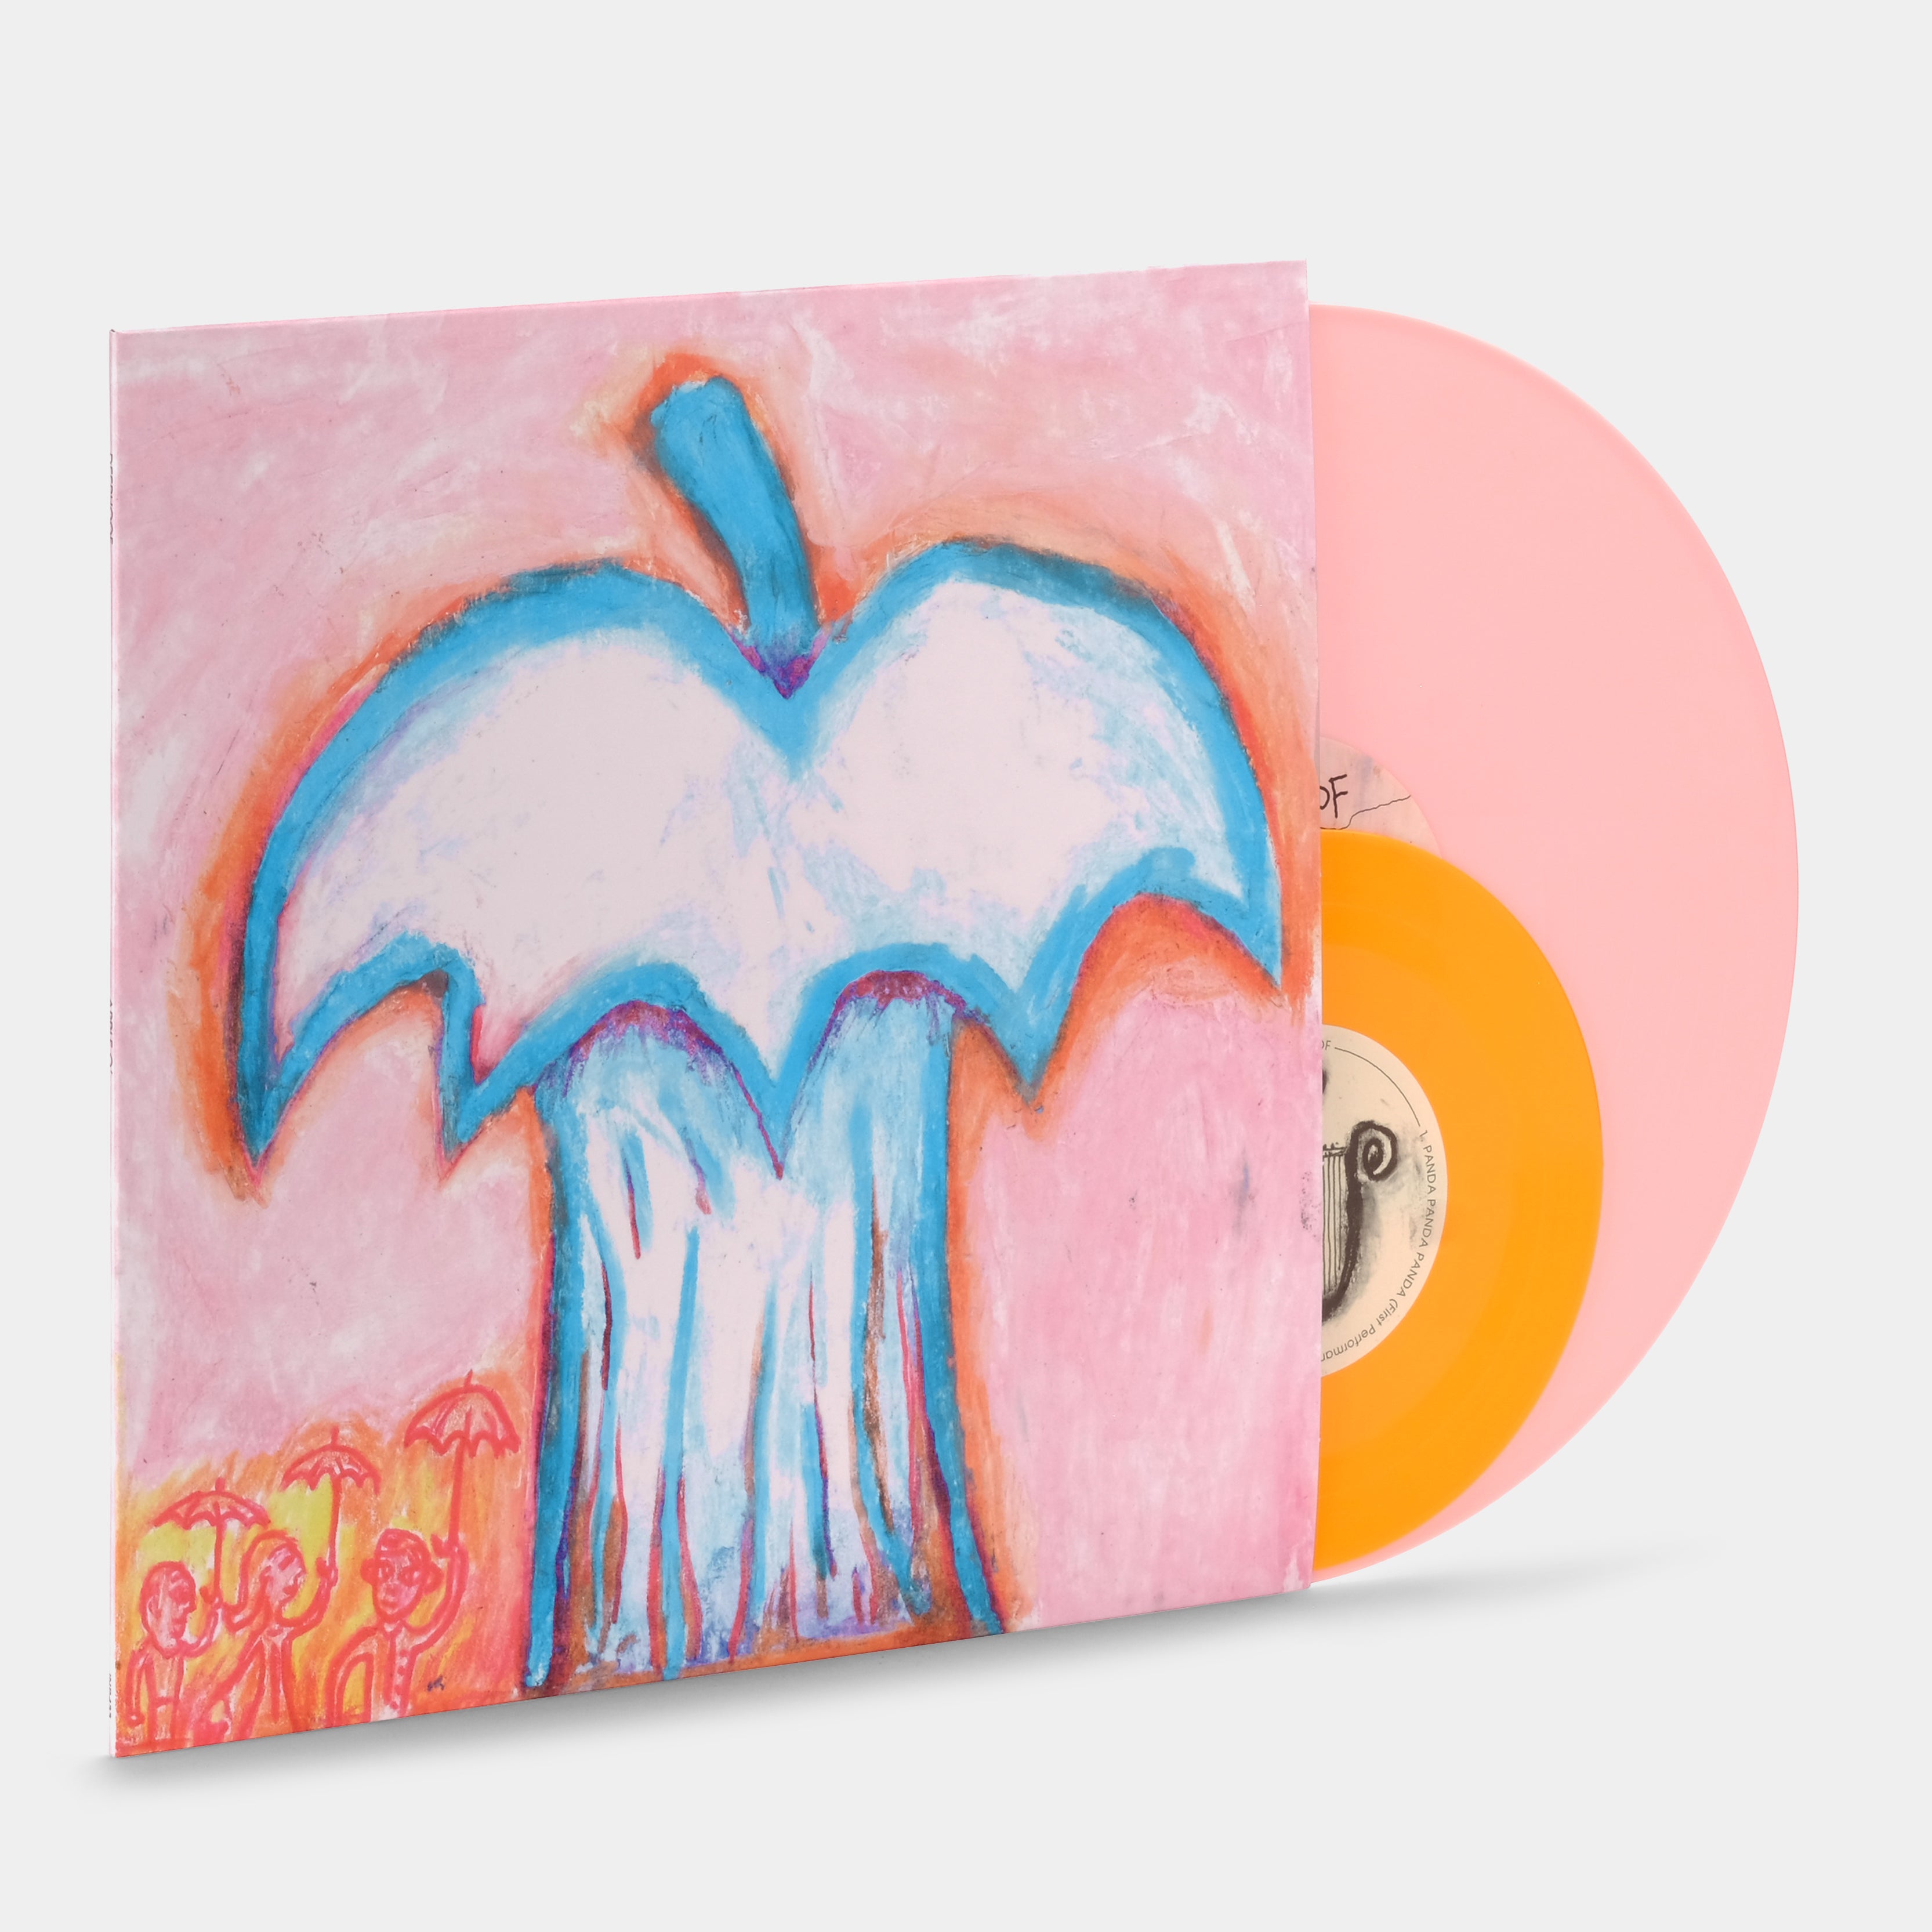 Deerhoof - Apple O' LP Cotton Candy Vinyl Record + 7" Orange Single